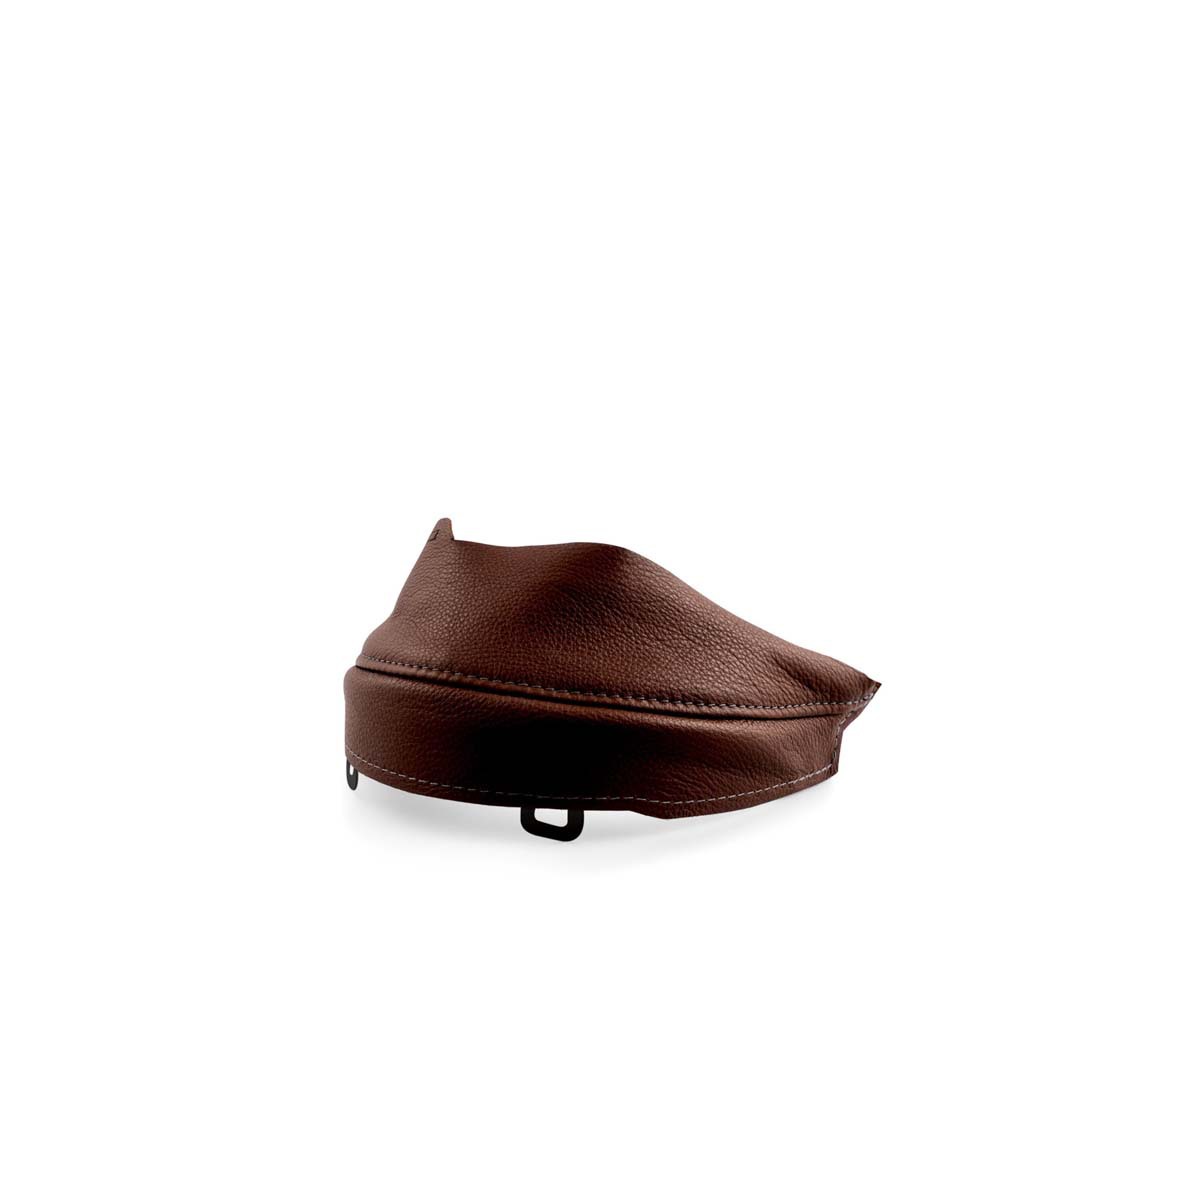 3M™ Speedglas™ Brown Leather Headcover (For G5-01 Welding Helmet)